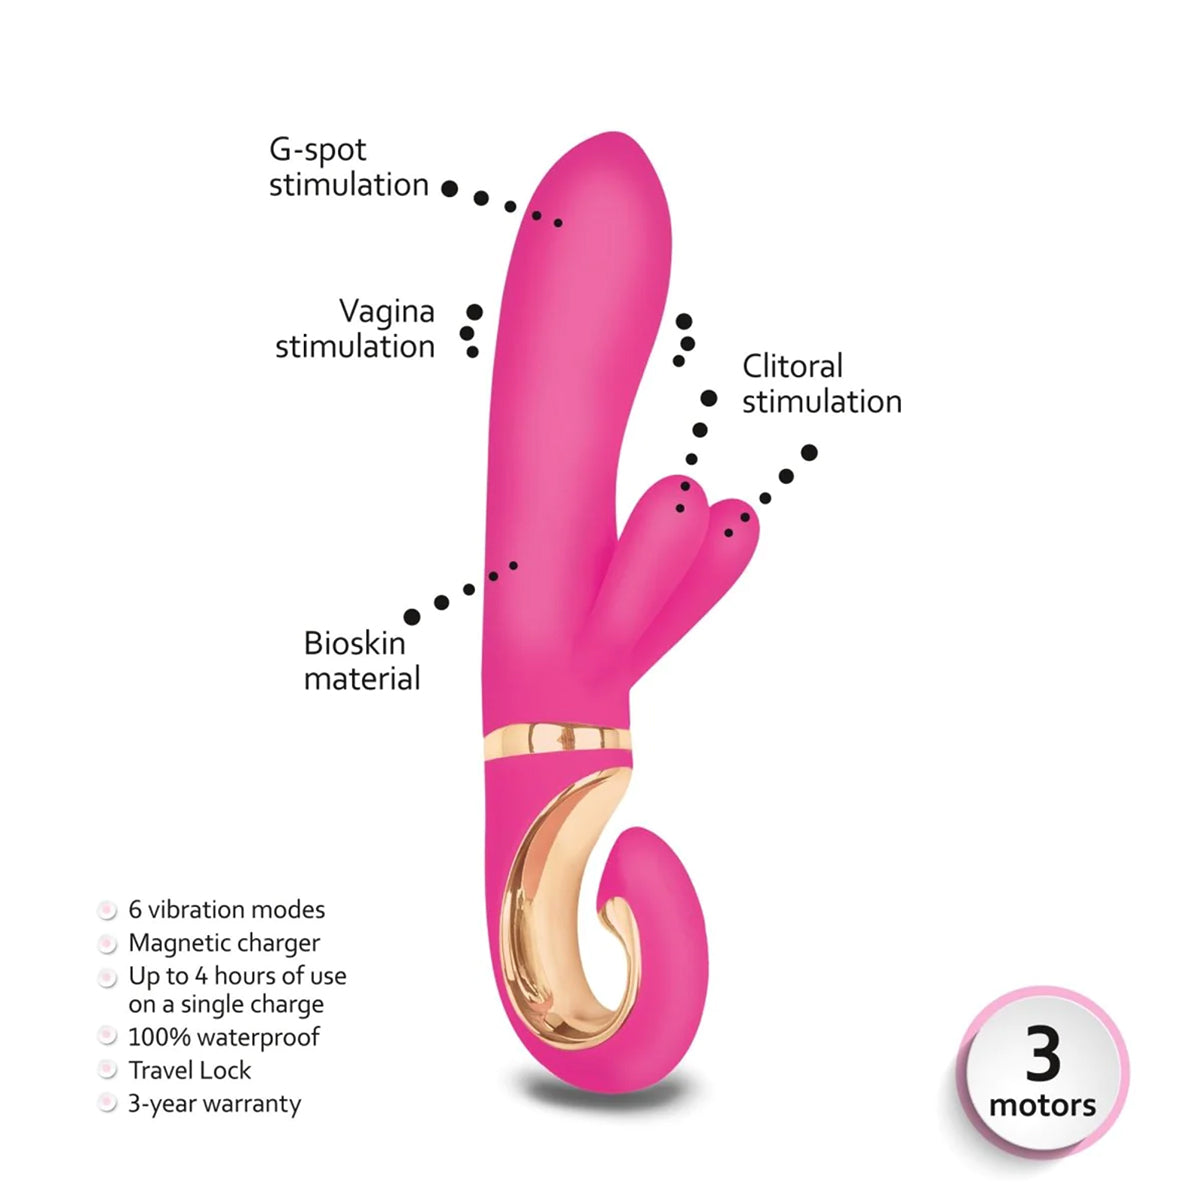 Gvibe Grabbit MINI - Dolce Violet G-Spot Vibrator